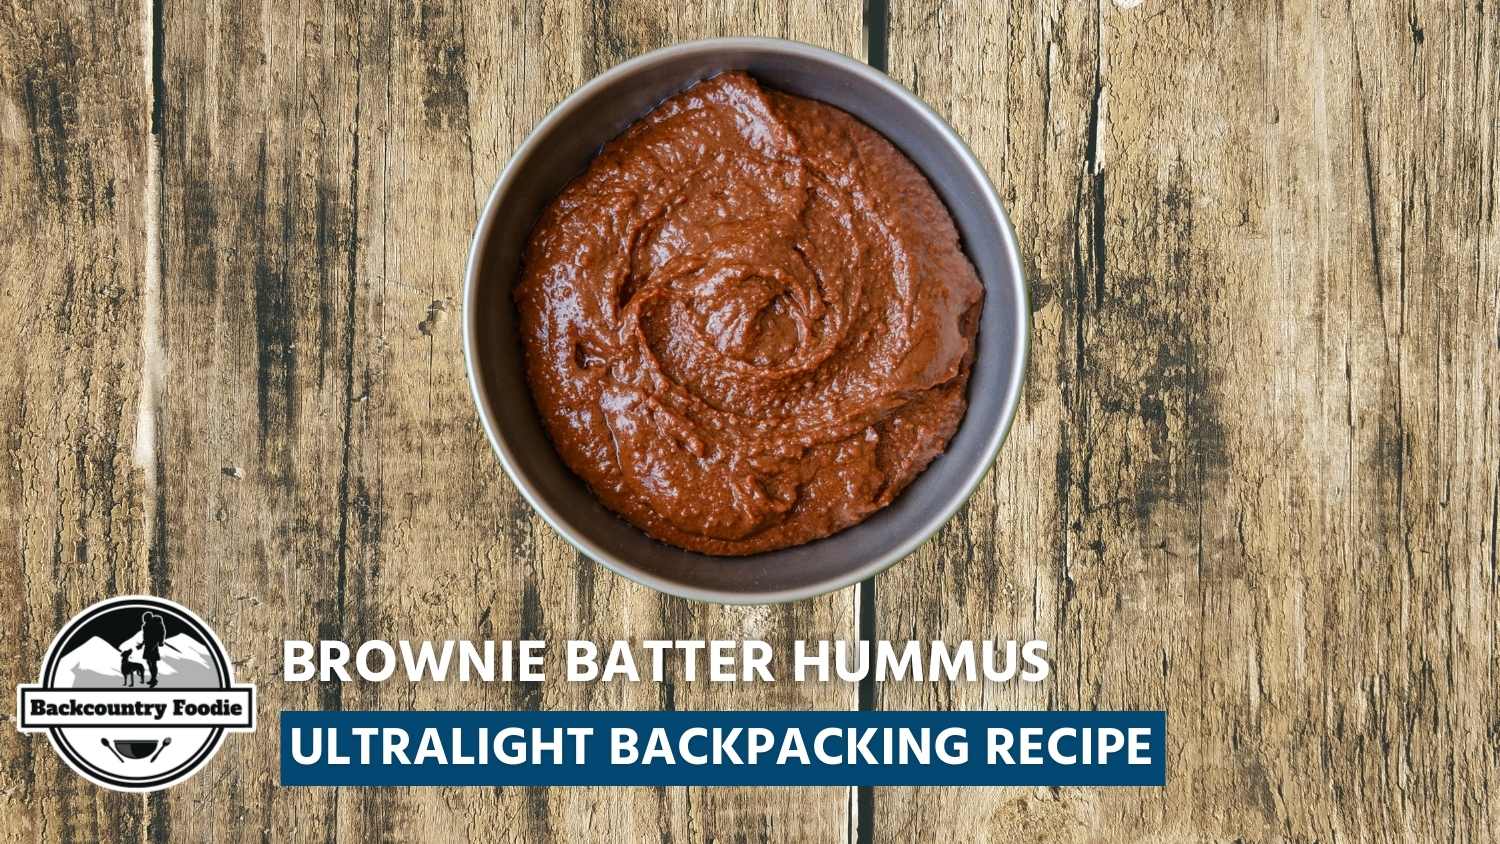 Backcountry Foodie Blog Brownie Batter Hummus Ultralight Backpacking Recipe